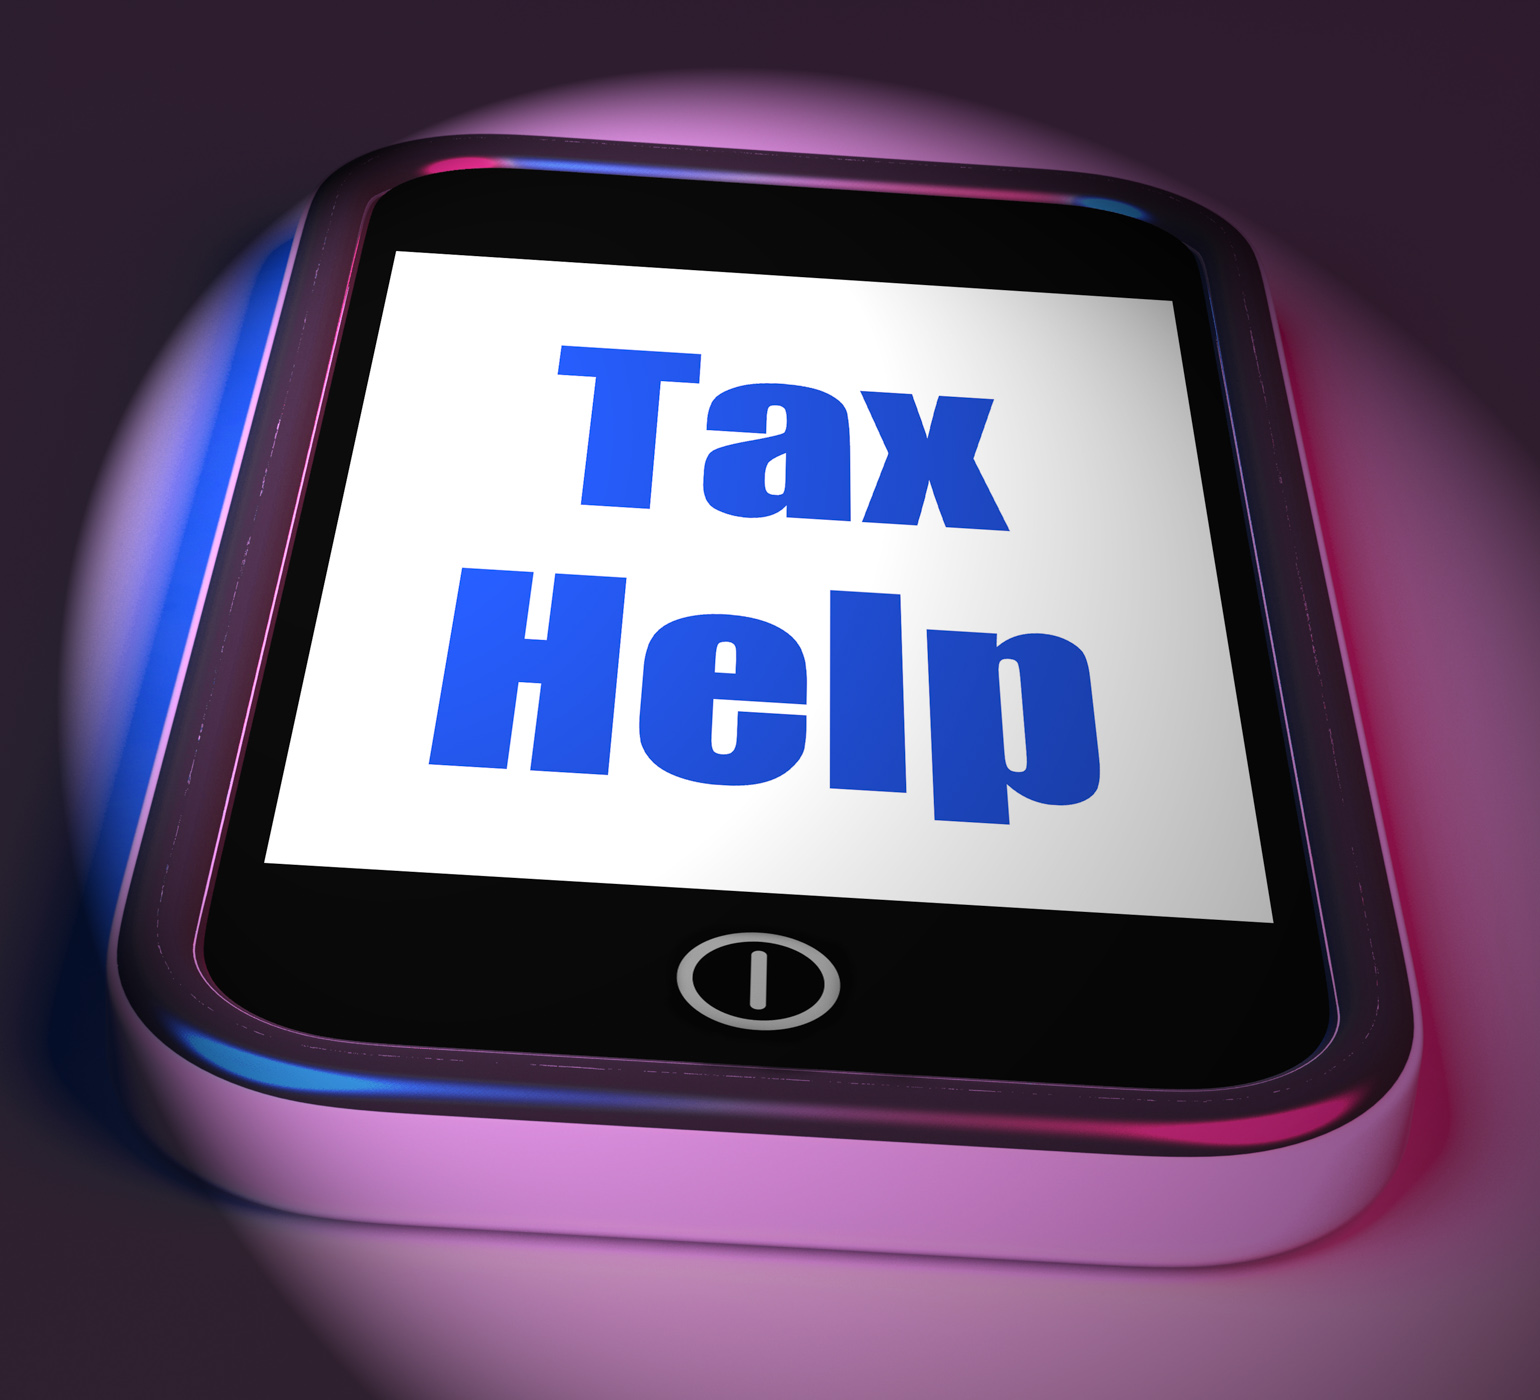 Tax help on phone displays taxation advice online photo